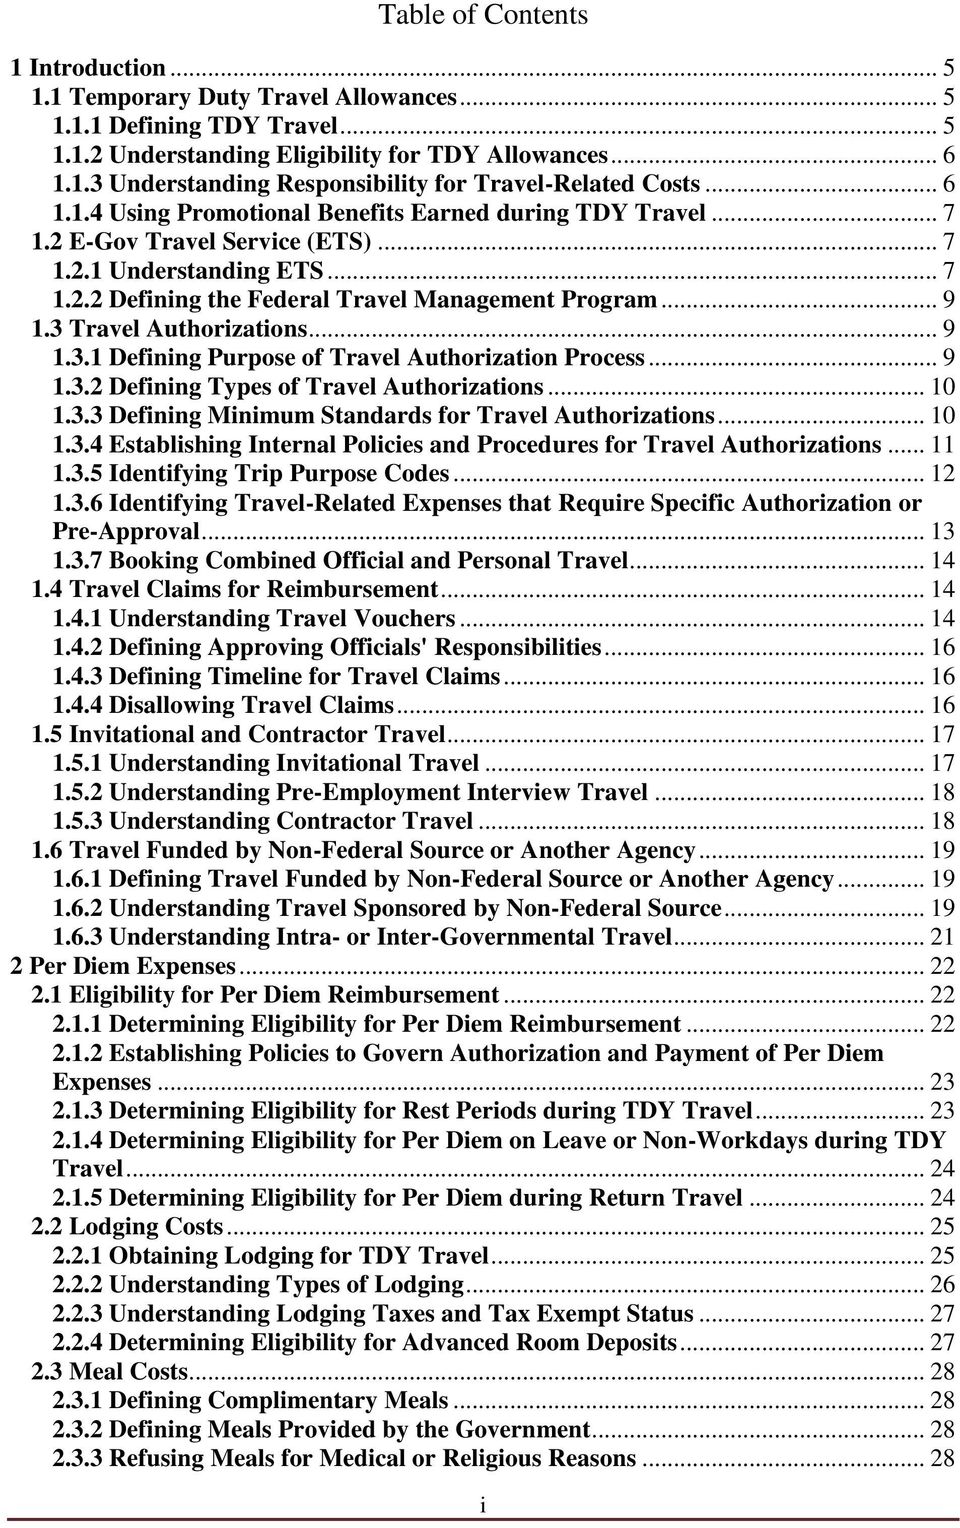 3 Travel Authorizations... 9 1.3.1 Defining Purpose of Travel Authorization Process... 9 1.3.2 Defining Types of Travel Authorizations... 10 1.3.3 Defining Minimum Standards for Travel Authorizations.